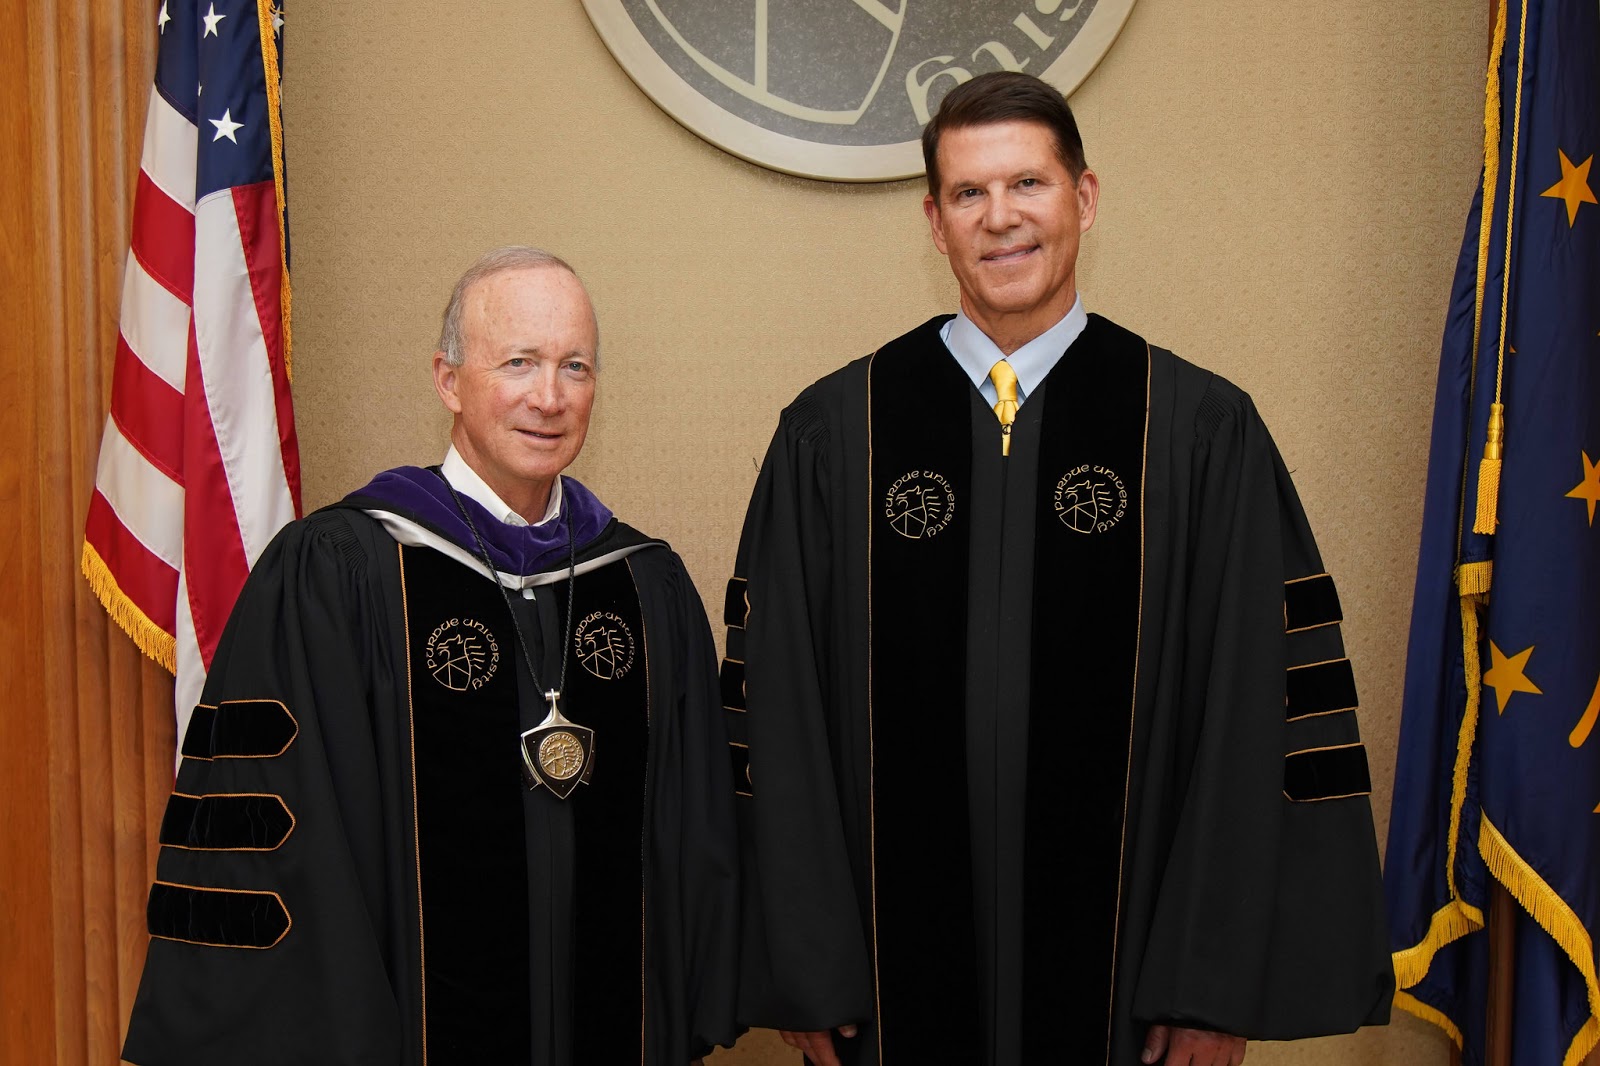 Purdue President Mitch Daniels after bestowing honorary doctorate in engineering on Krach